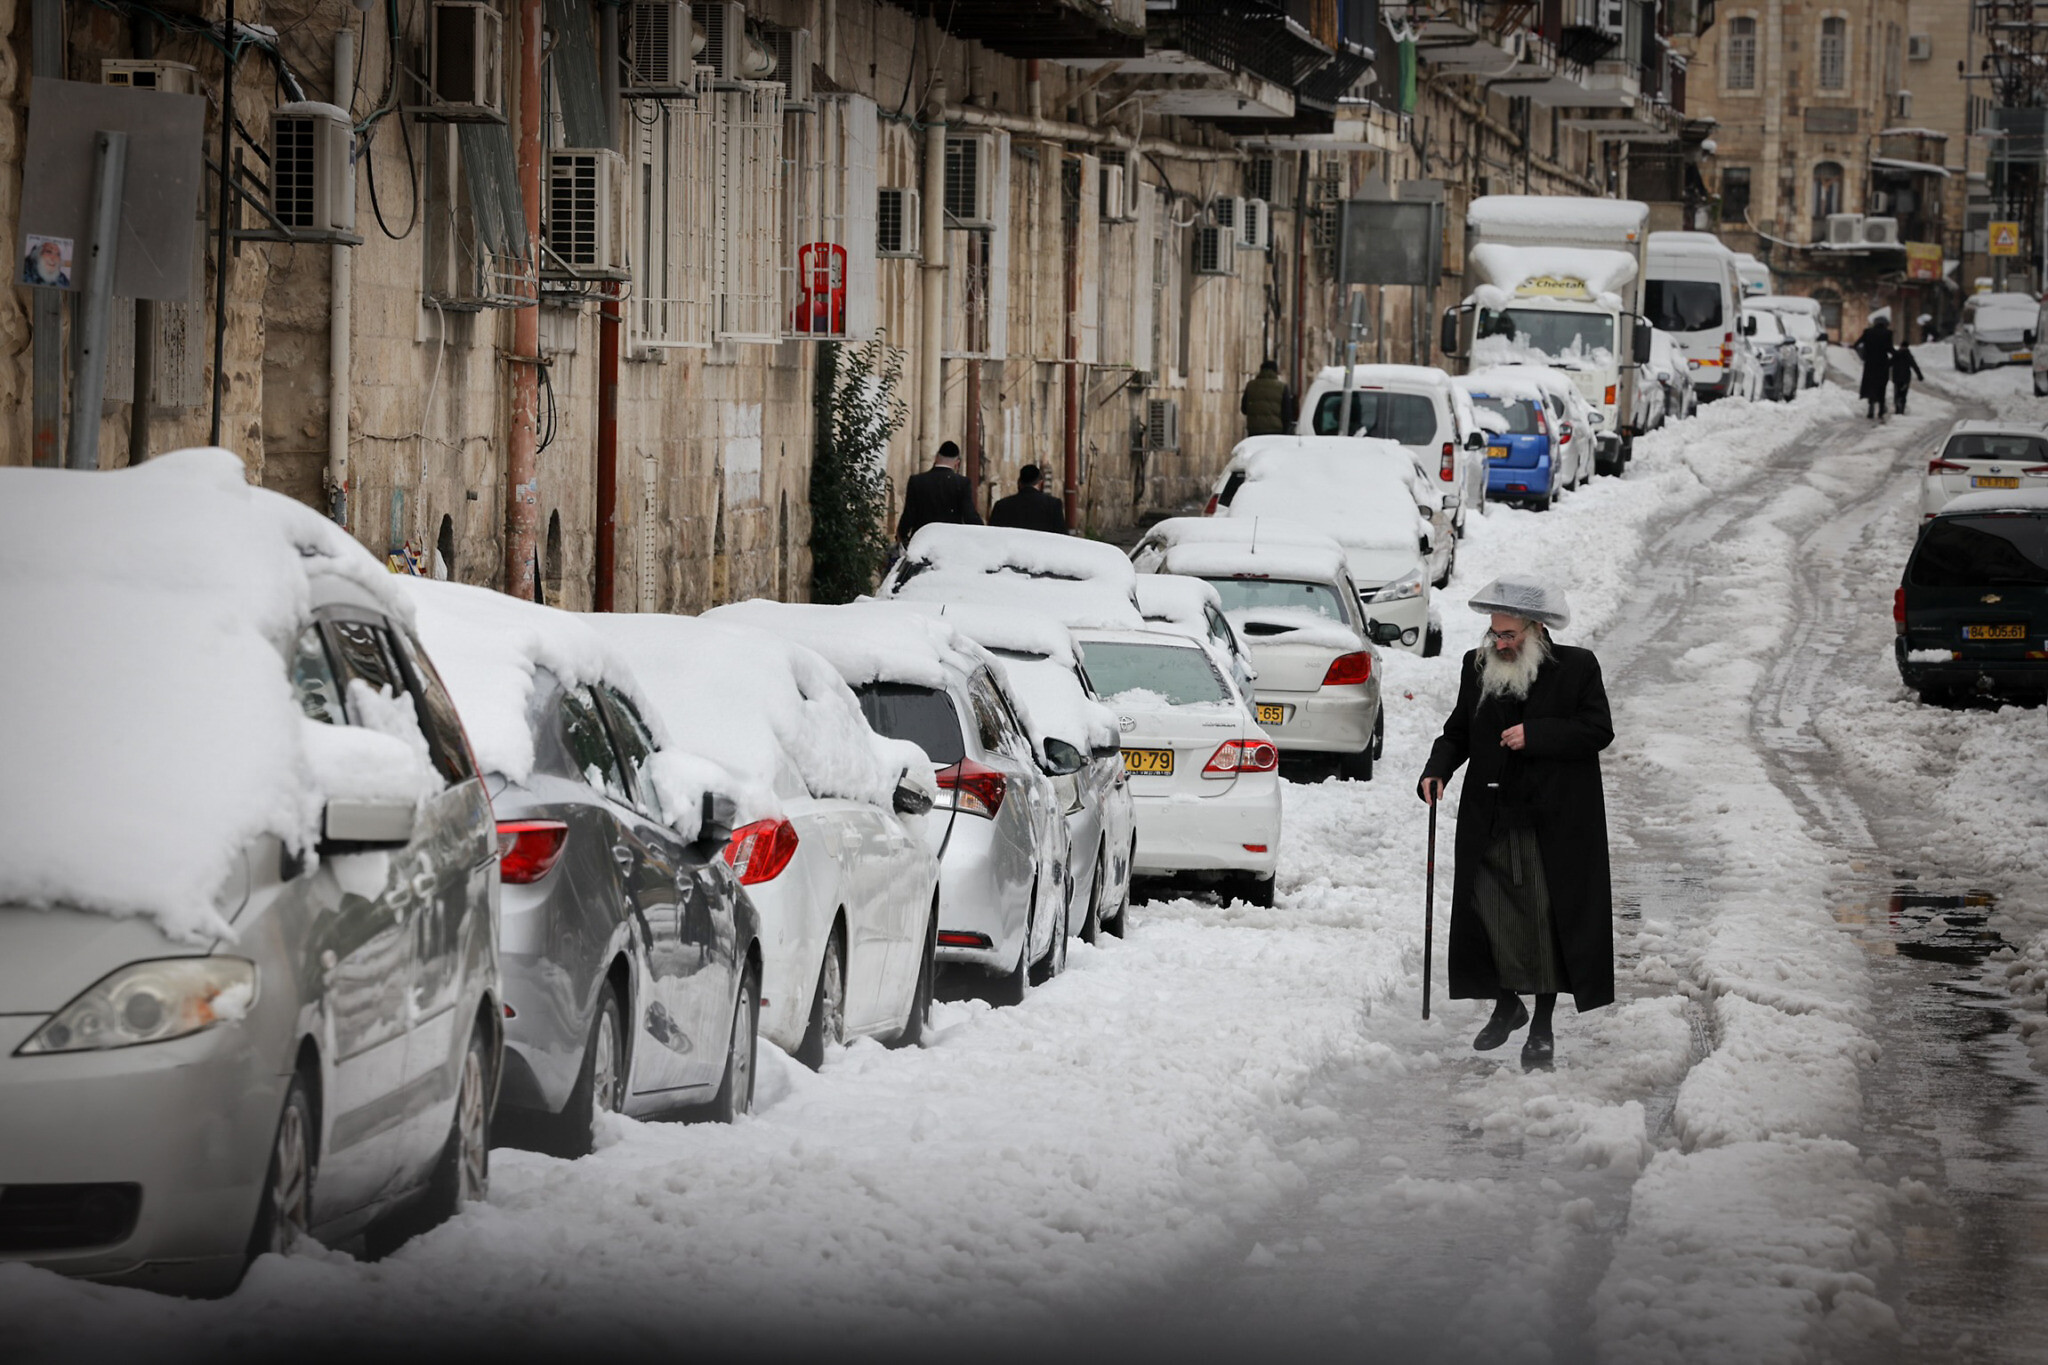 Snow blankets Jerusalem, transforming city into winter wonderland